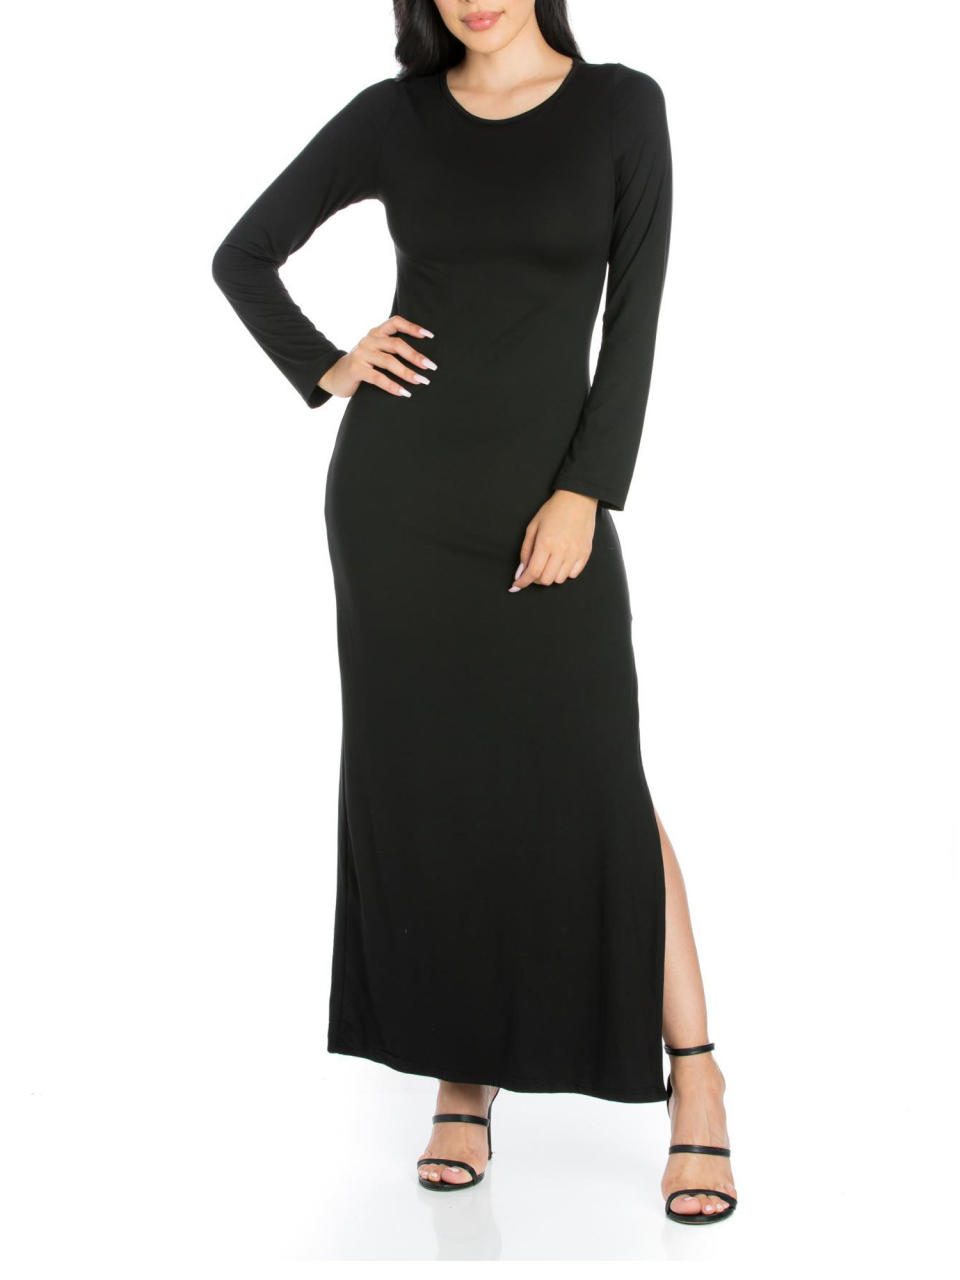 Model wearing black dress with black heels